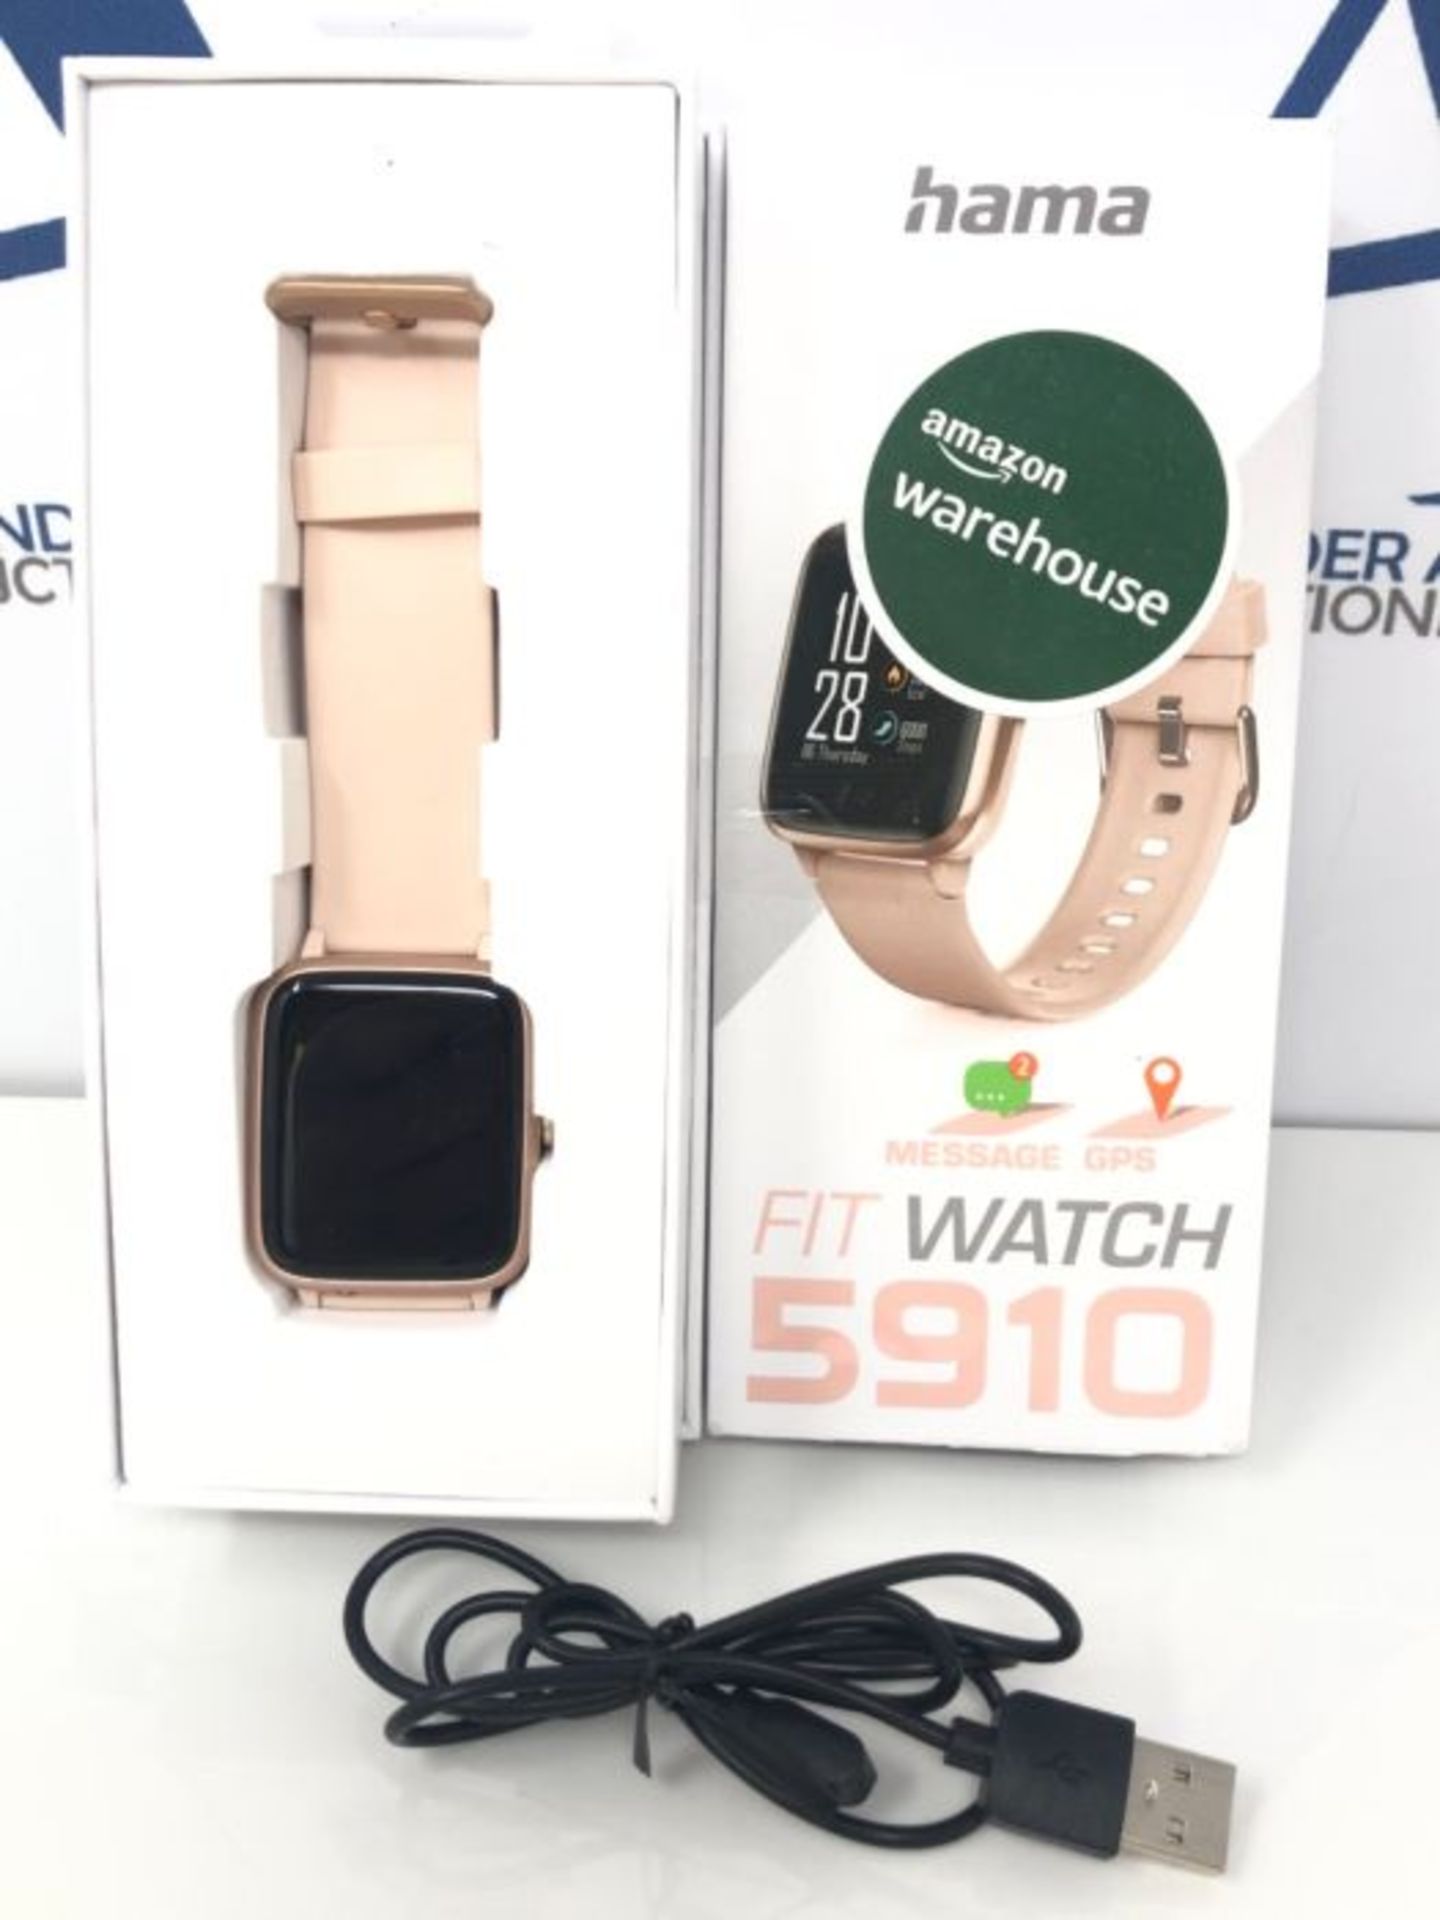 RRP £58.00 Hama Smartwatch 5910, GPS, wasserdicht (Fitnesstracker fÃ¼r Herzfrequenz/Kalorien, S - Image 2 of 3